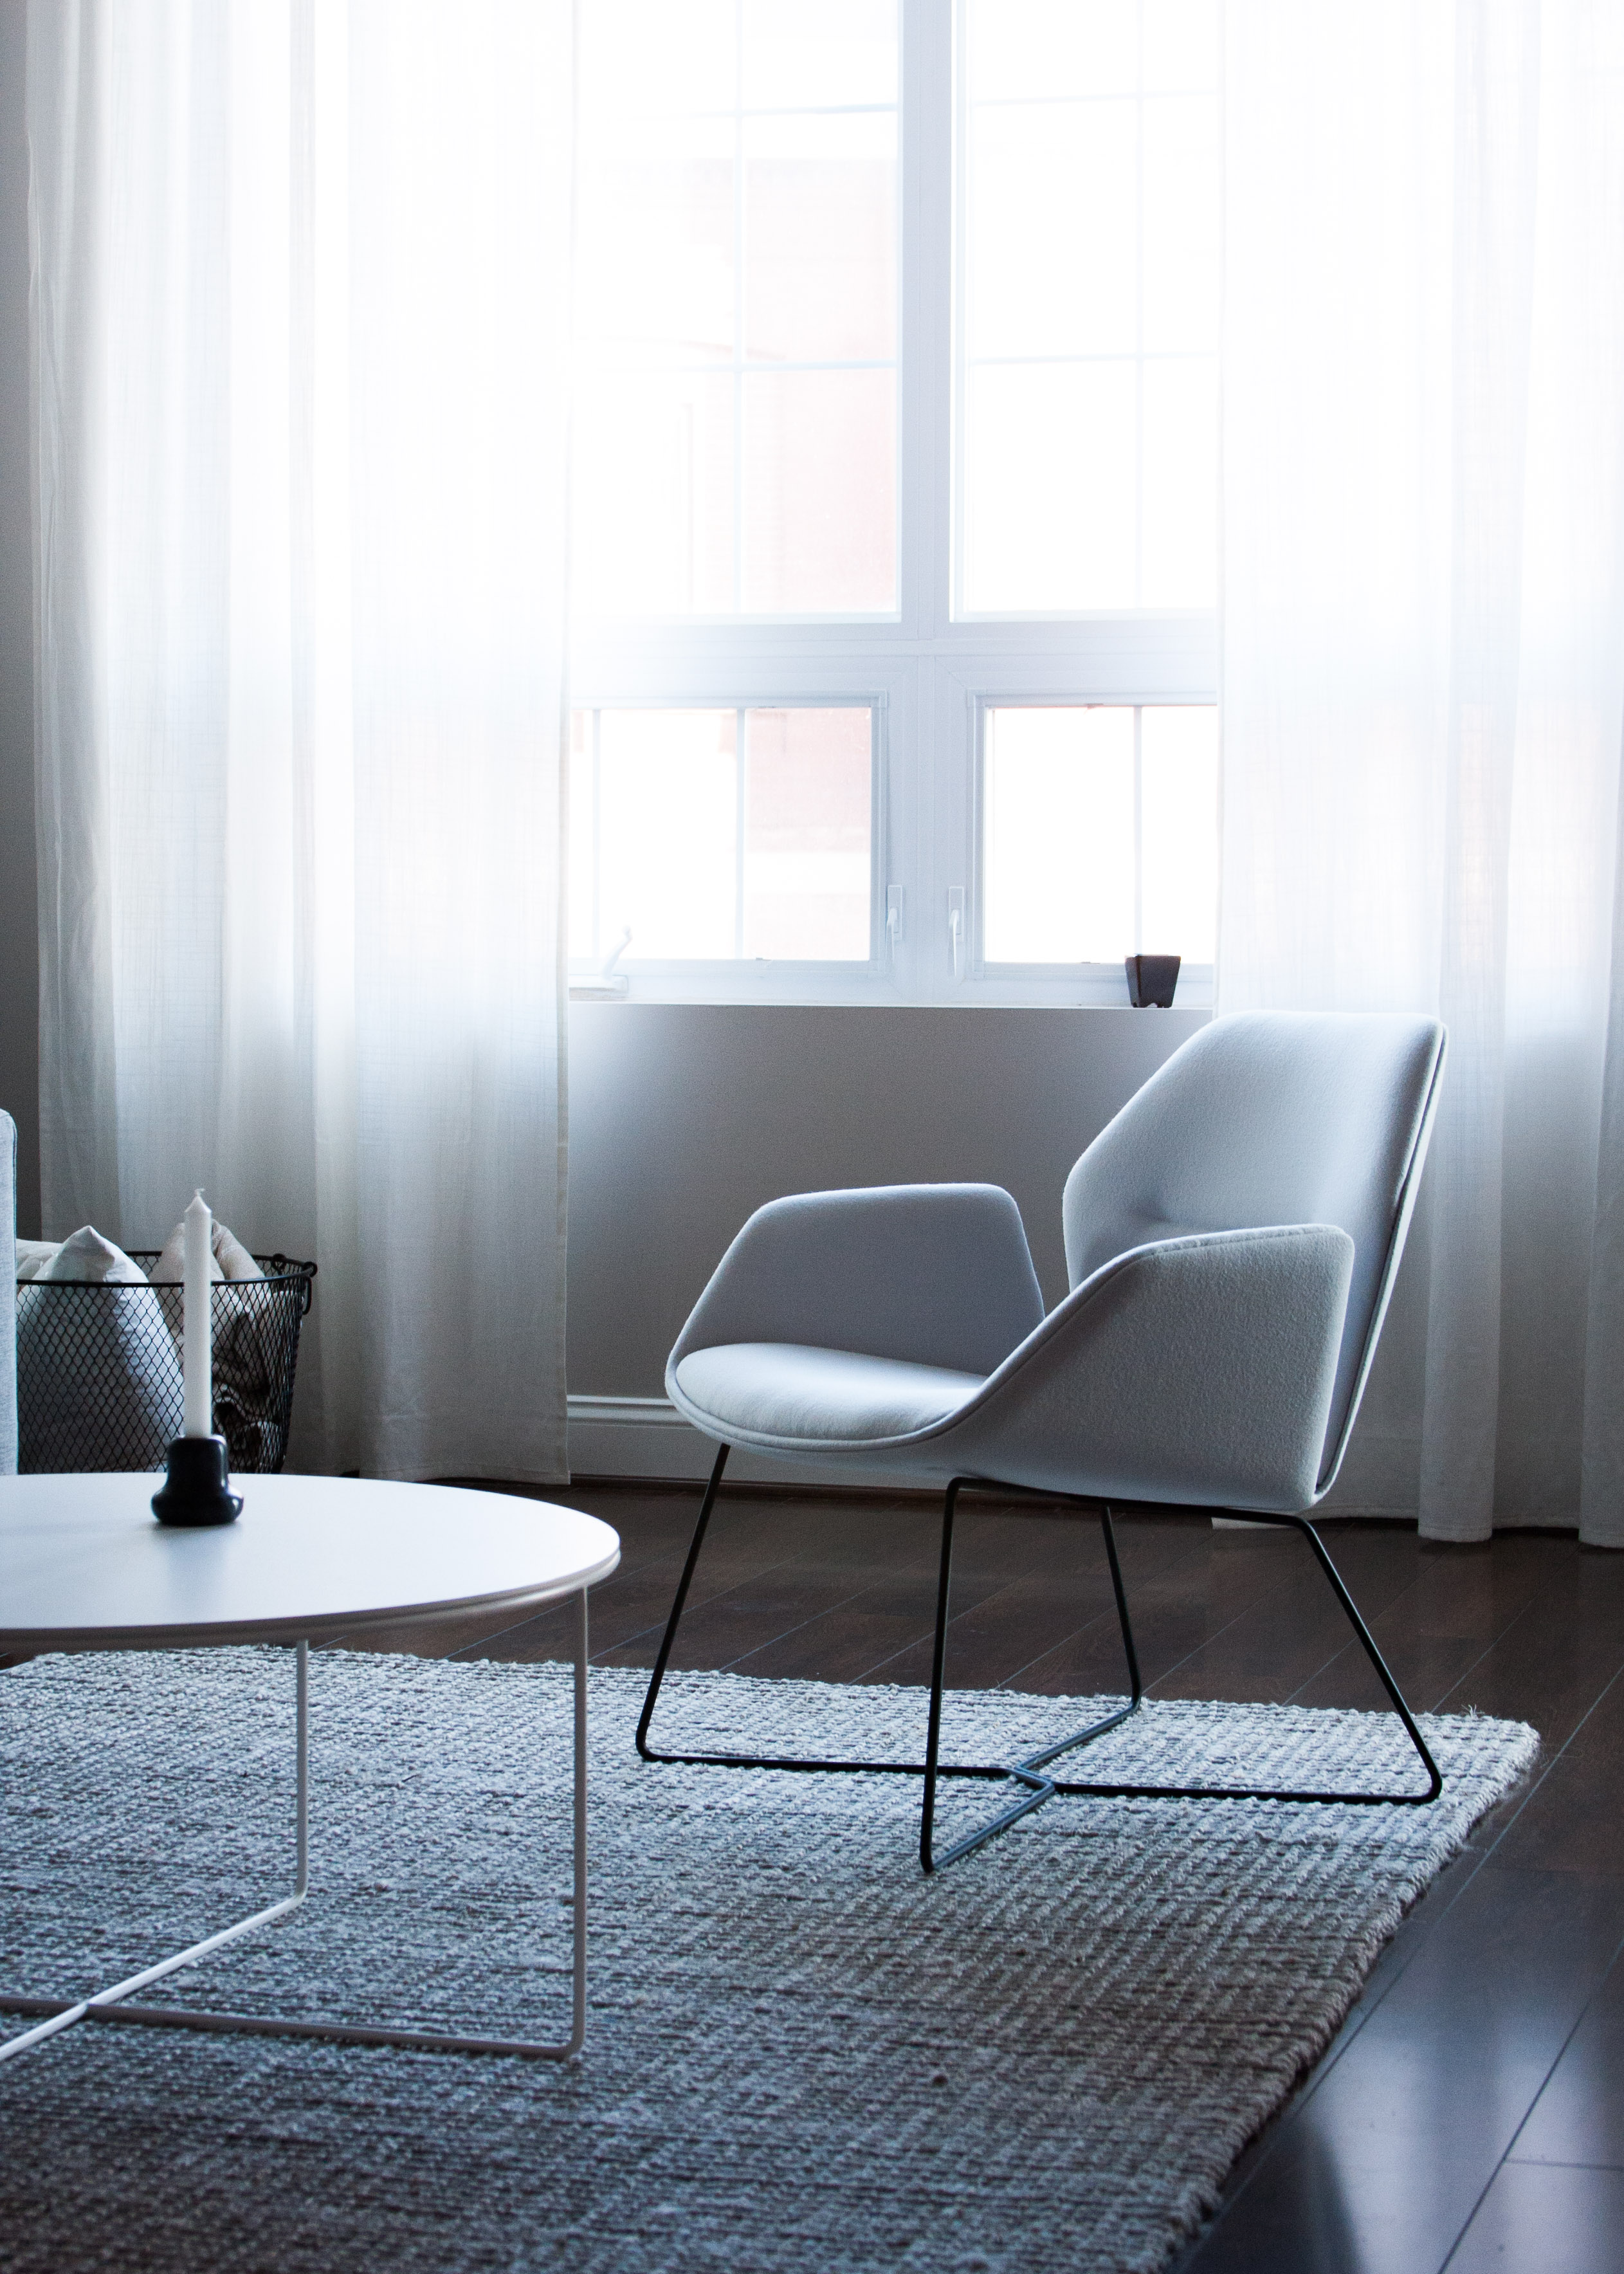 davis furniture ginkgo lounge chair minimalist living room interior